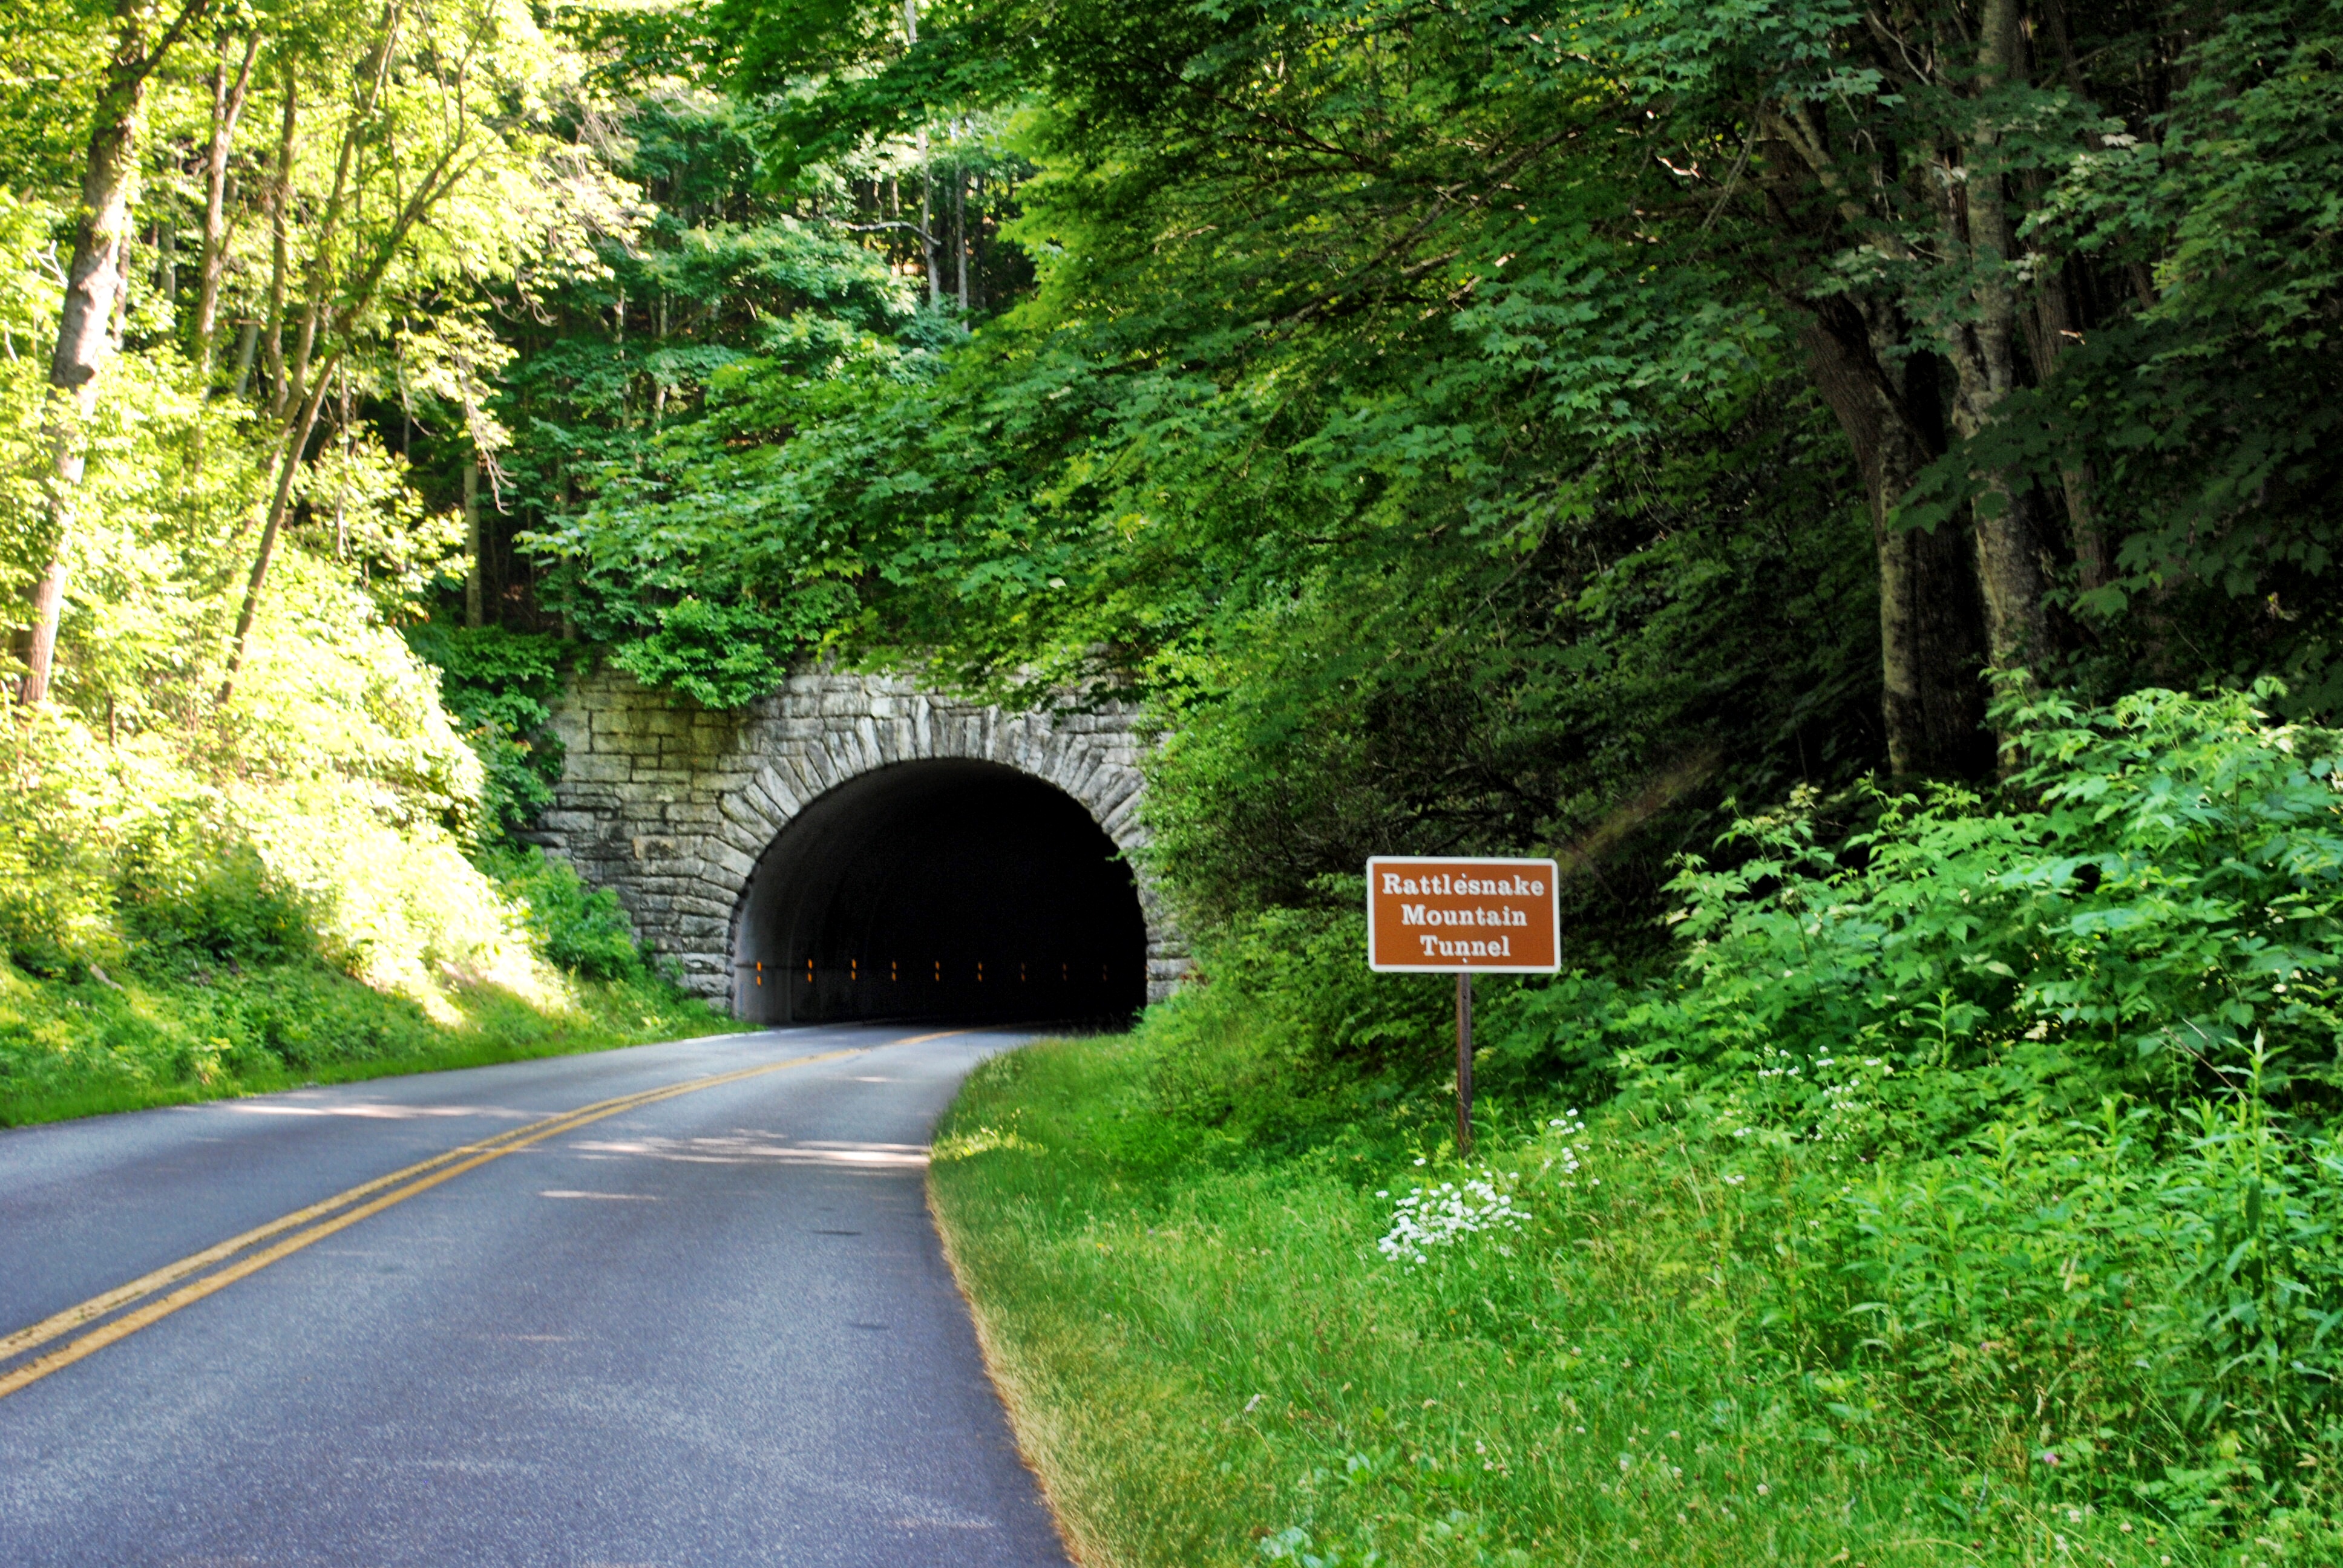 Rattlesnake Mountain Tunnel in North Carolina